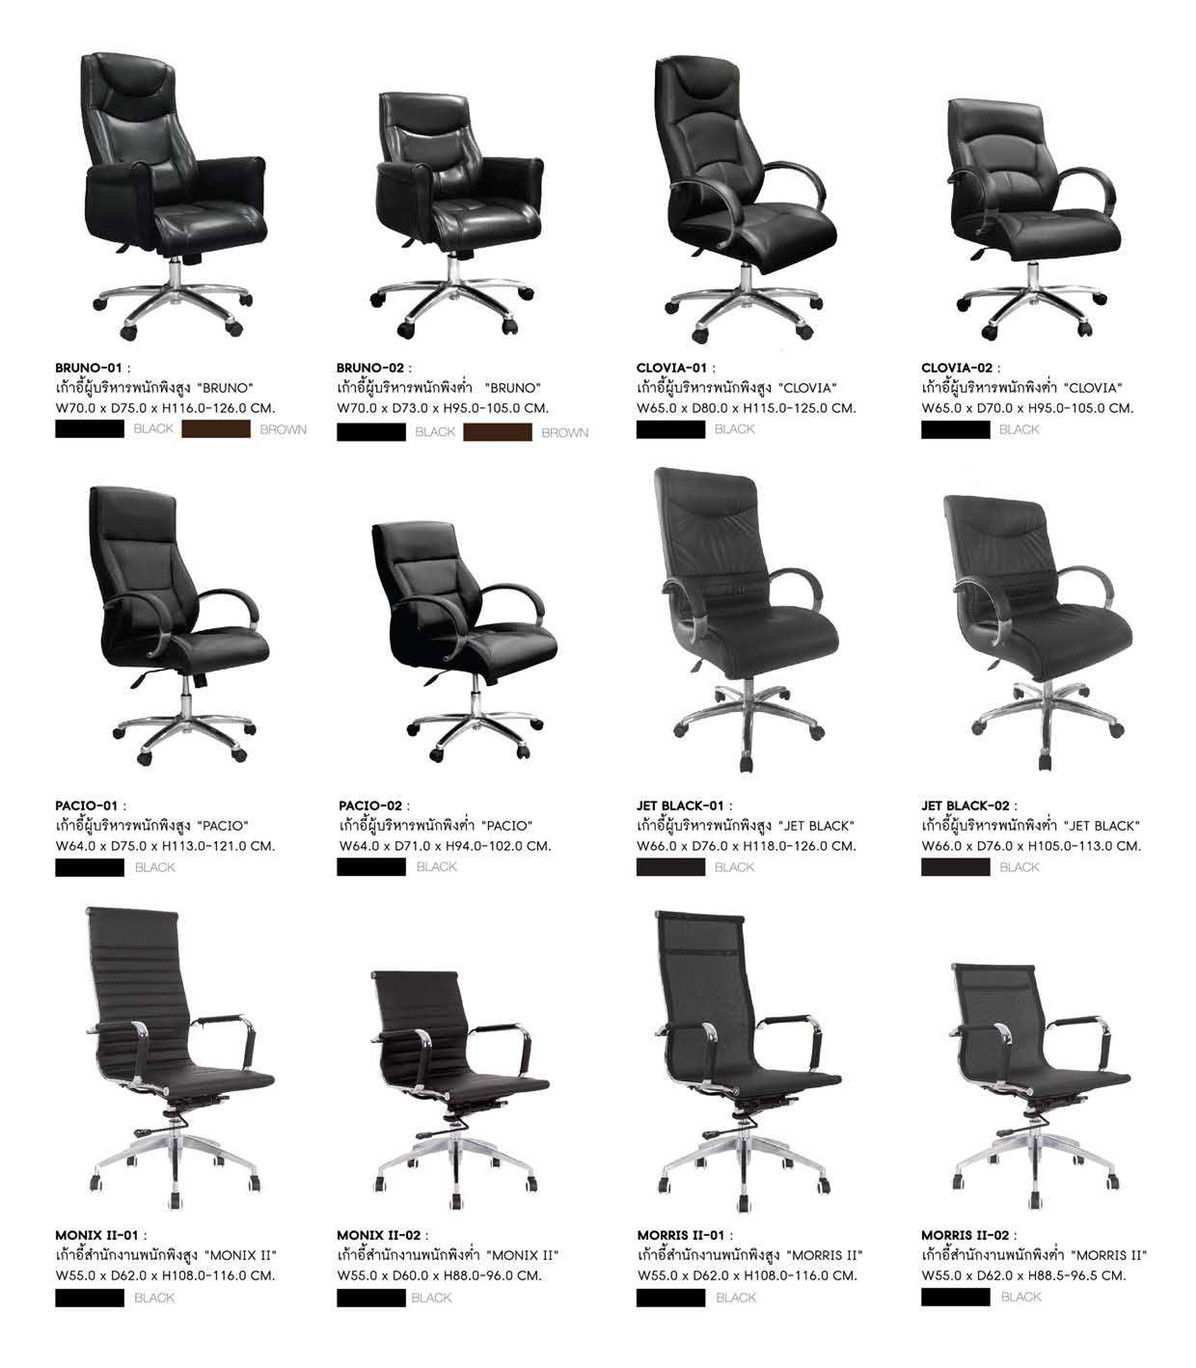 42025::MORRIS-02::เก้าอี้สำนักงาน MORRIS-02 ขนาด ก570xล630xส900-980 มม. สีดำ เก้าอี้สำนักงาน SURE